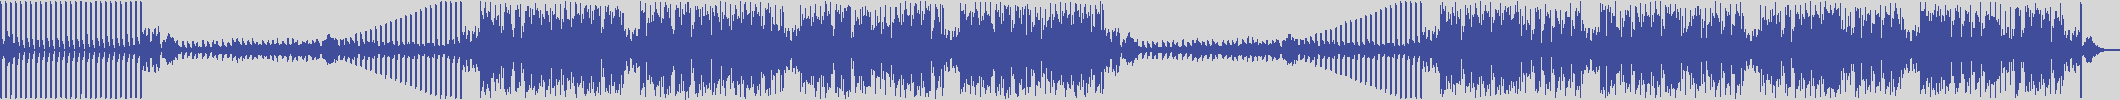 nf_boyz_records [NFY041] Victor Jaston - No Buono [Tom Nigro's Philtering Mix] audio wave form